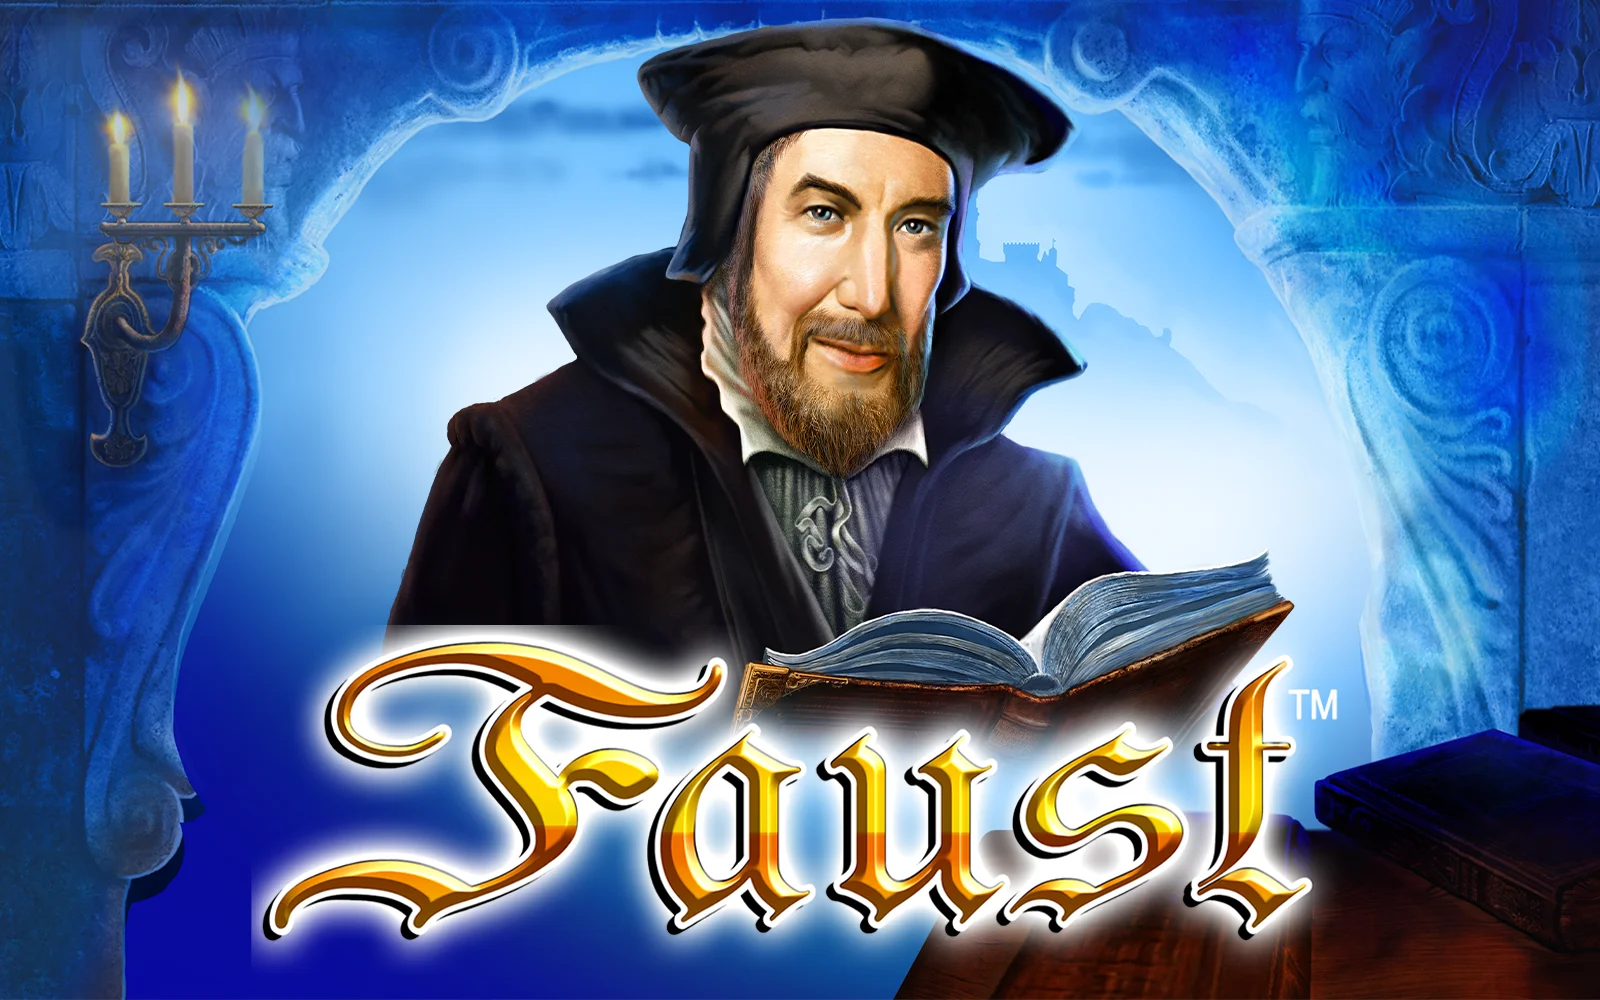 Play Faust on Starcasino.be online casino